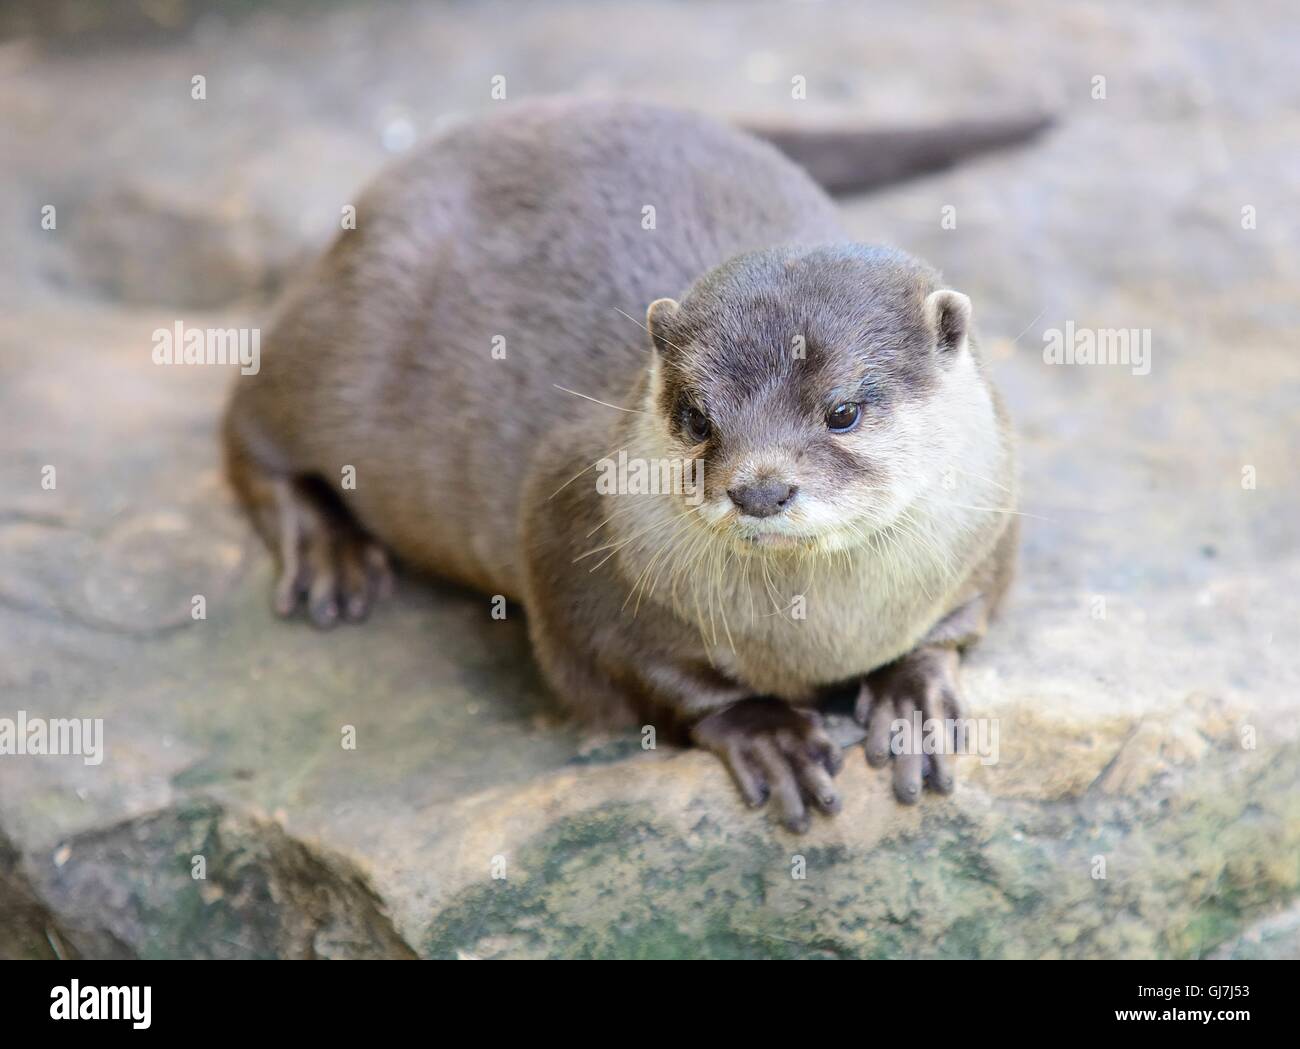 Small-clawed otter lying on stone. Latin name Amblonyx cinerea. Stock Photo